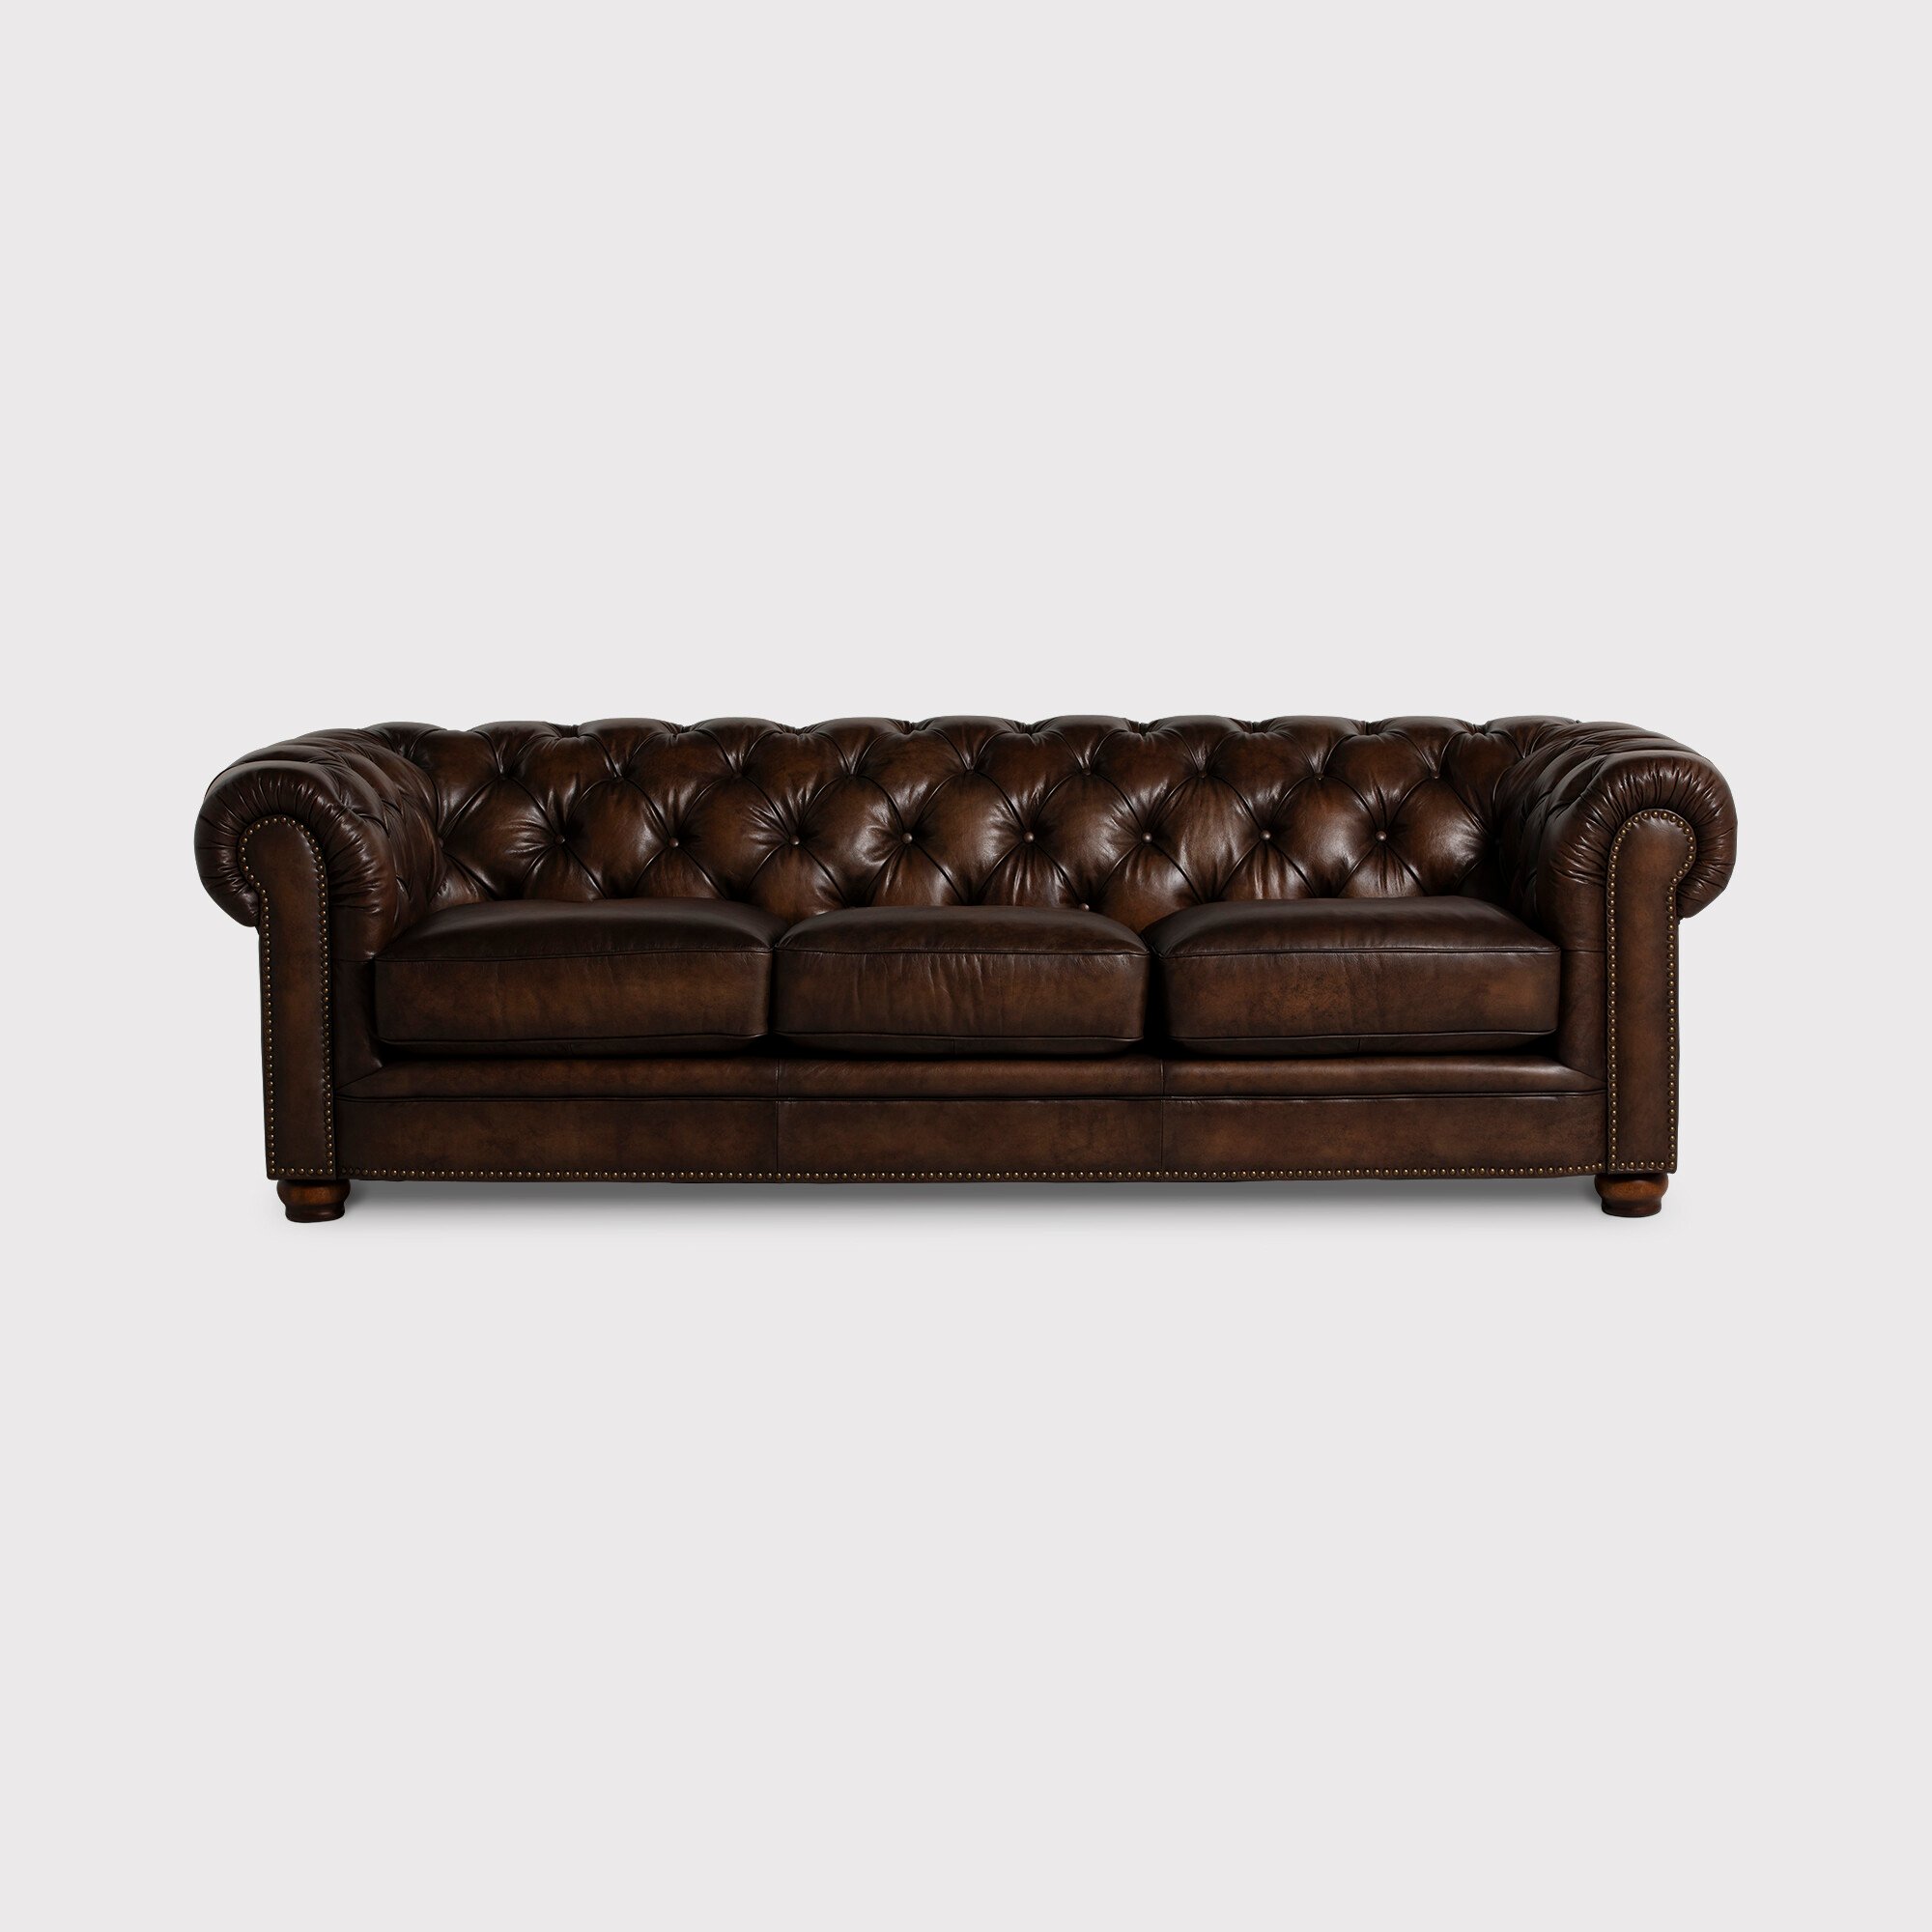 Everett 4 Seater Chesterfield Sofa, Brown Fabric | Barker & Stonehouse